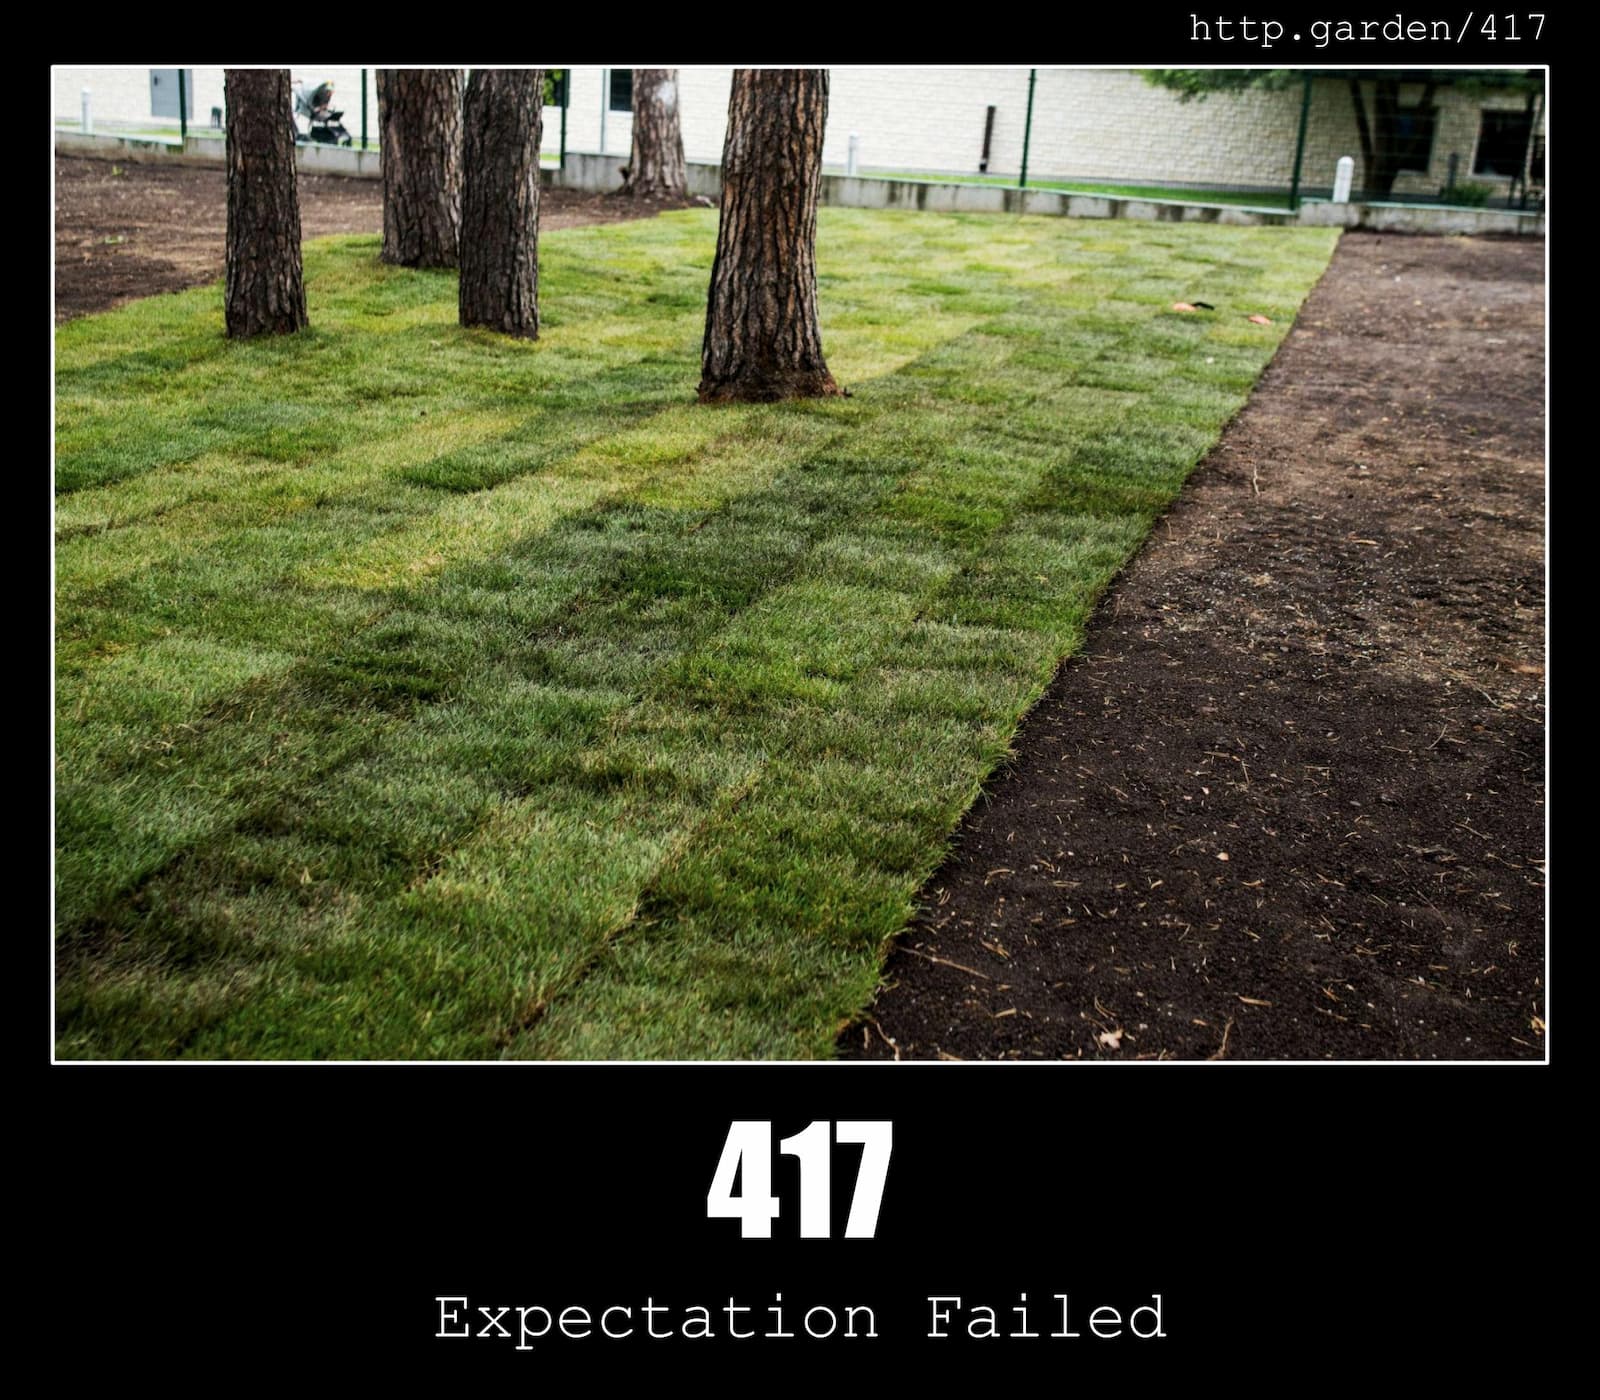 HTTP Status Code 417 Expectation Failed & Gardening